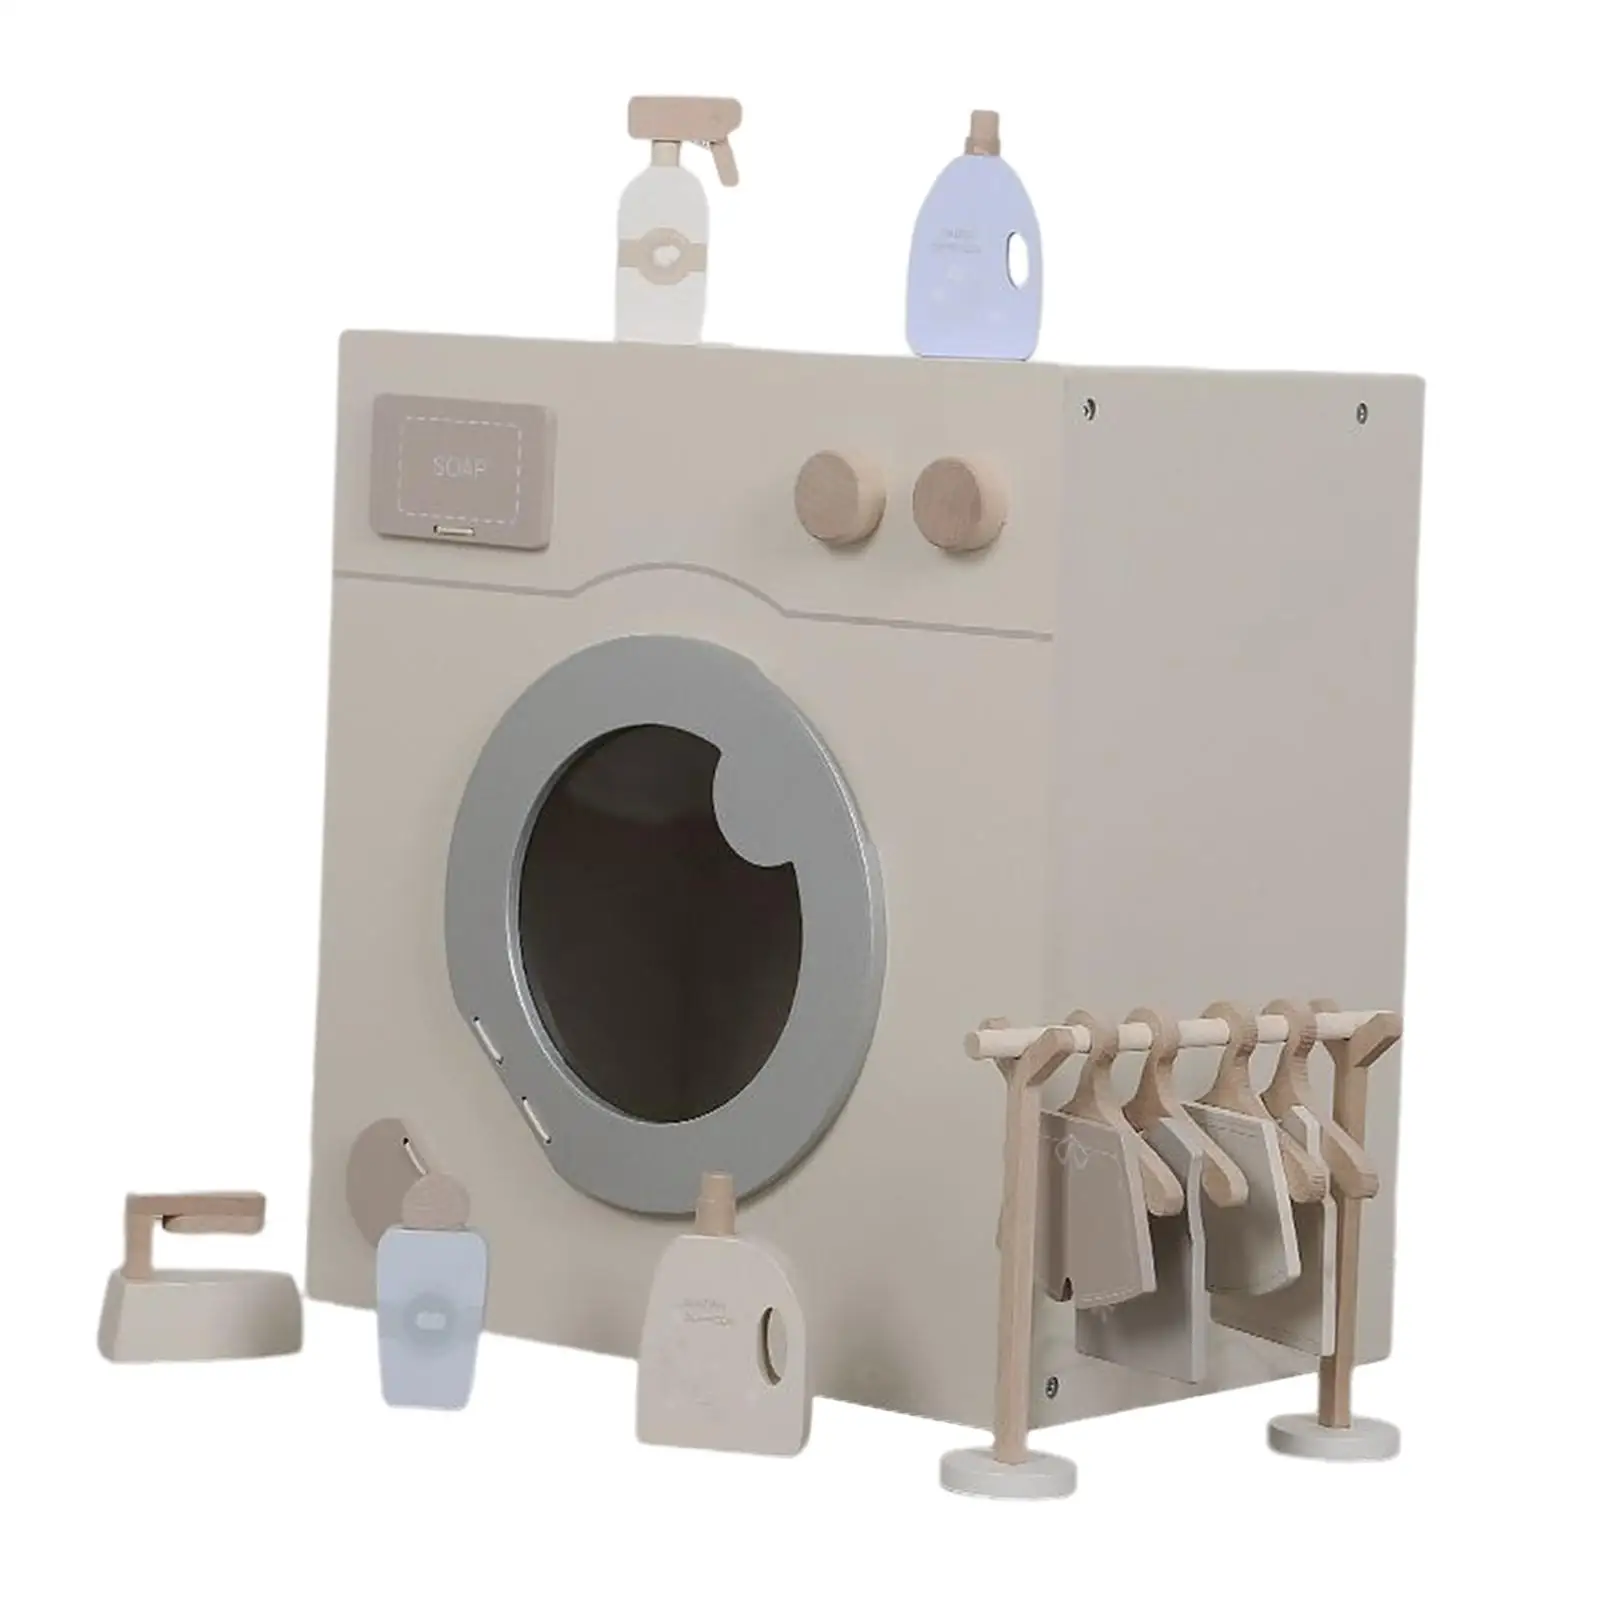 Wooden Washing Machine Playset Appliance Pretend Play,, Doll